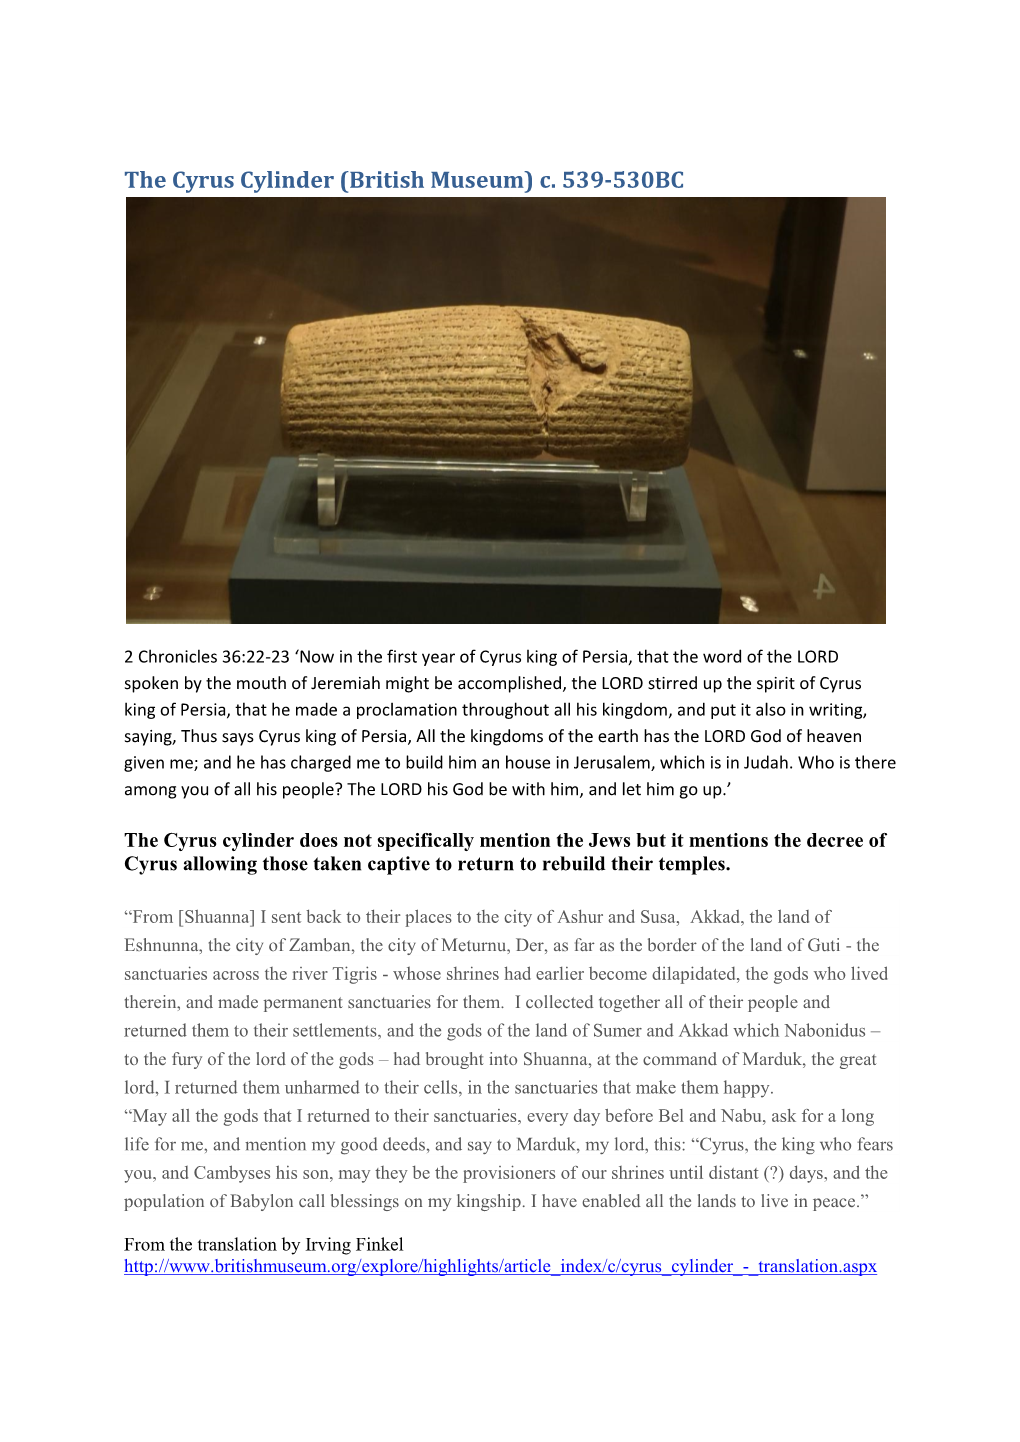 The Cyrus Cylinder (British Museum) C. 539-530BC